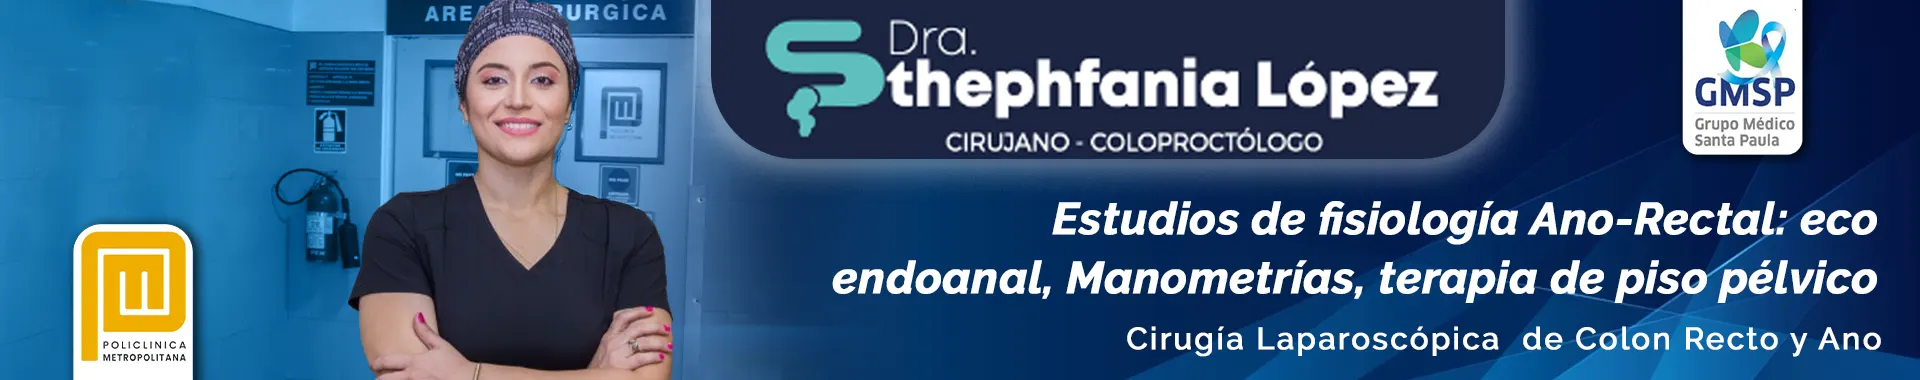 Imagen 3 del perfil de Dra. Sthephfania López